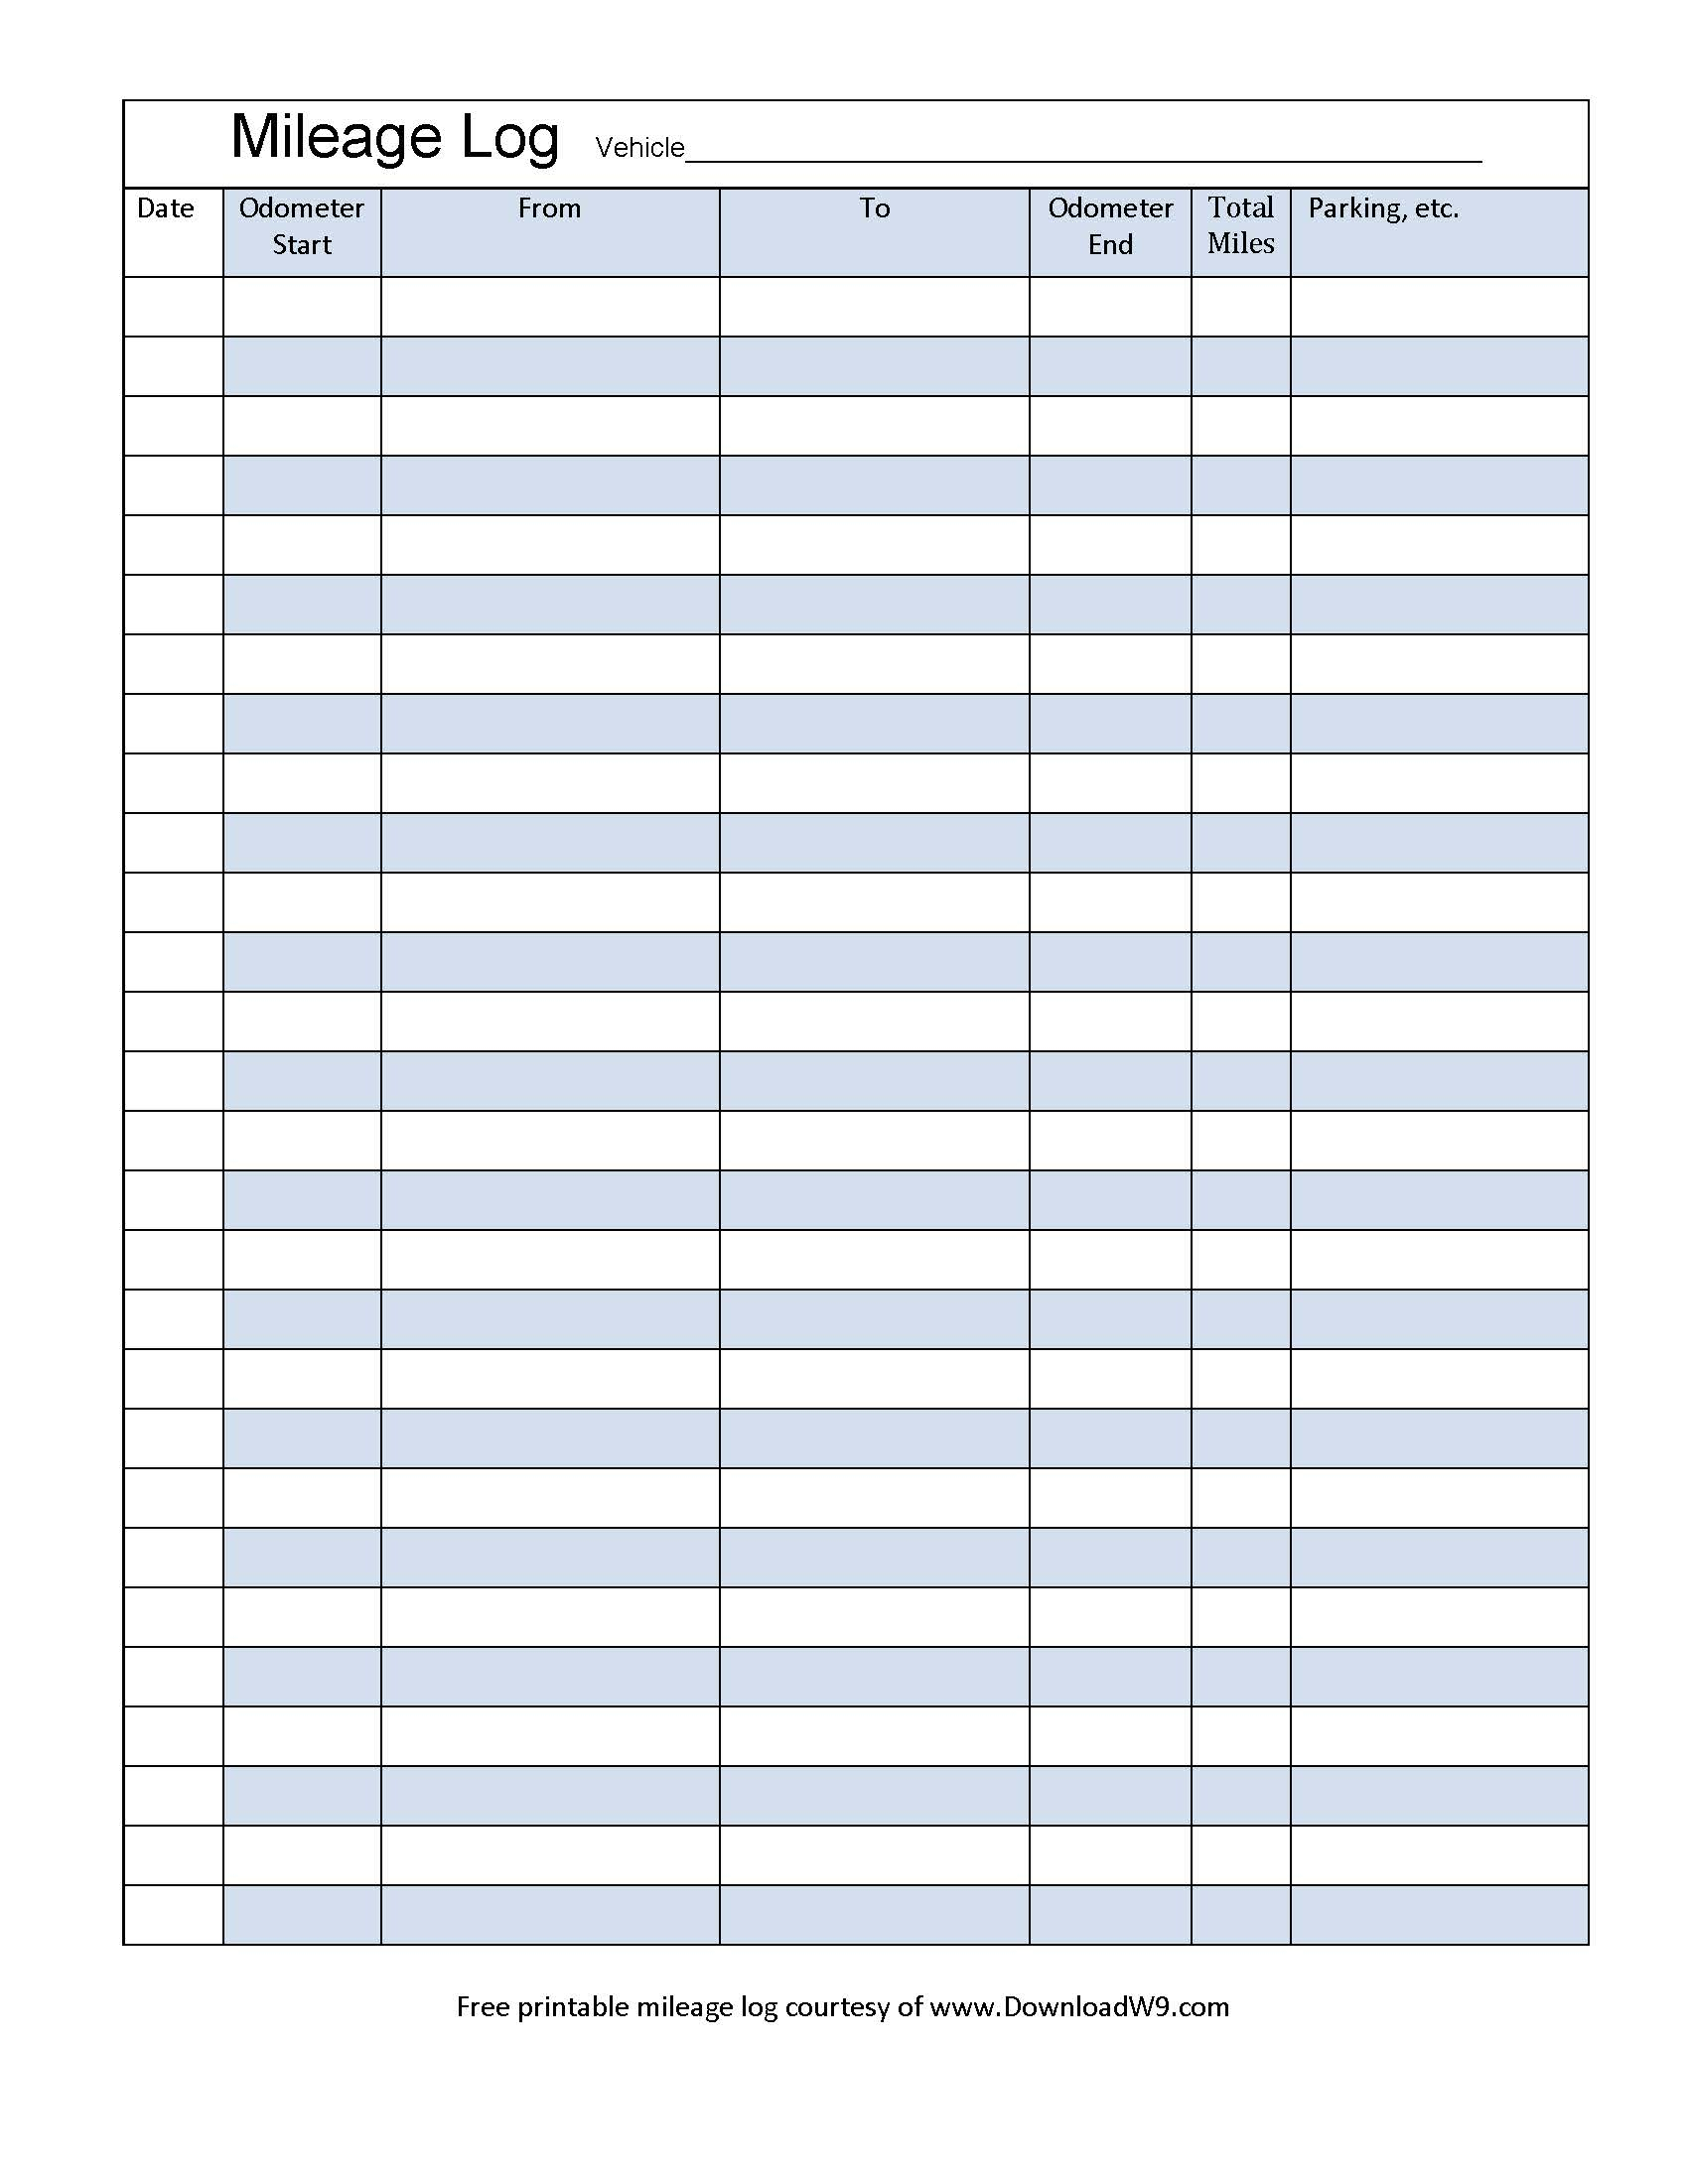 free-printable-spreadsheet-forms-throughout-mileage-form-templates-free-printable-log-1689